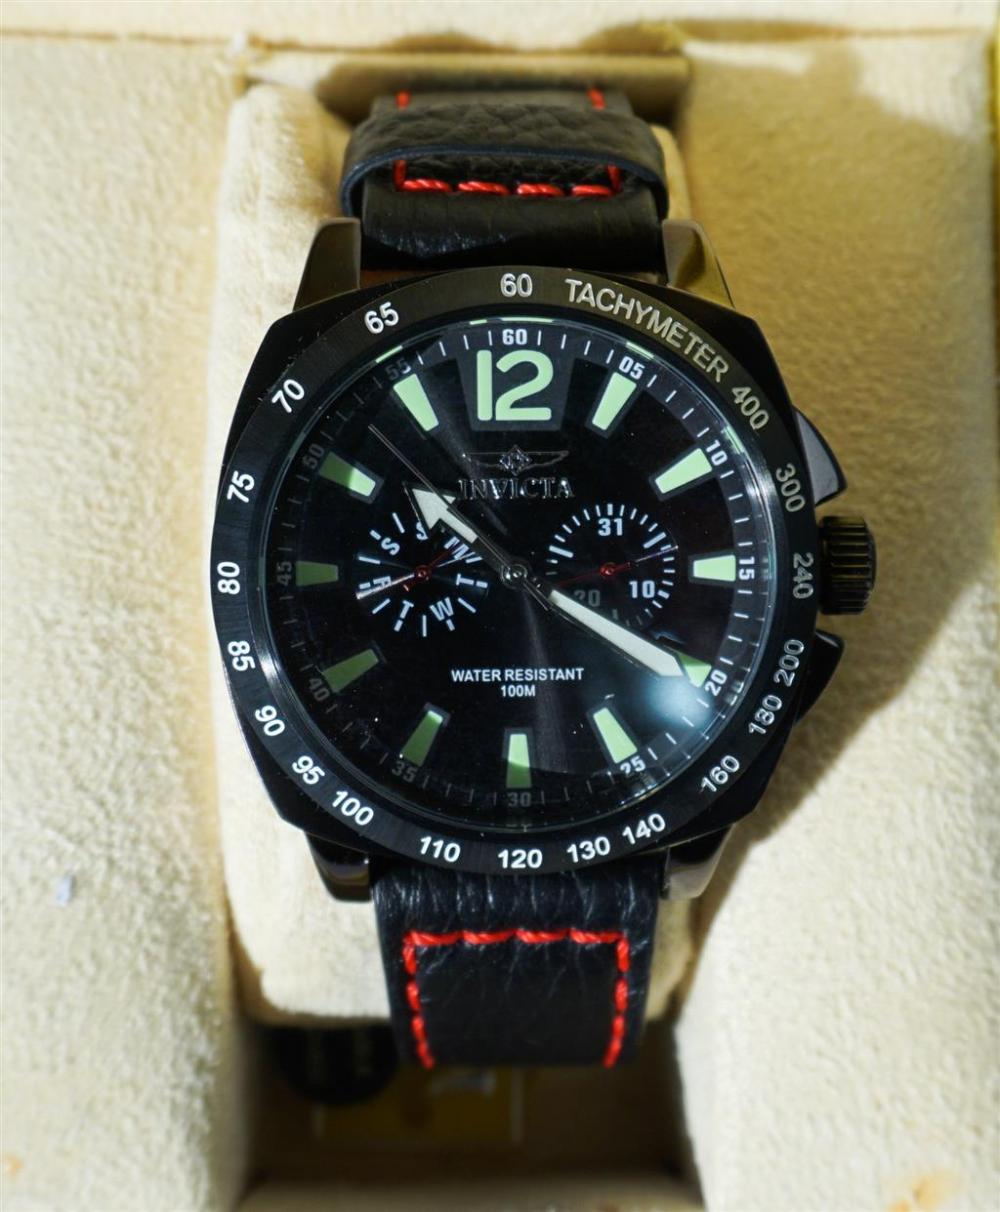 INVICTA WRISTWATCH IN CASEInvicta Wristwatch